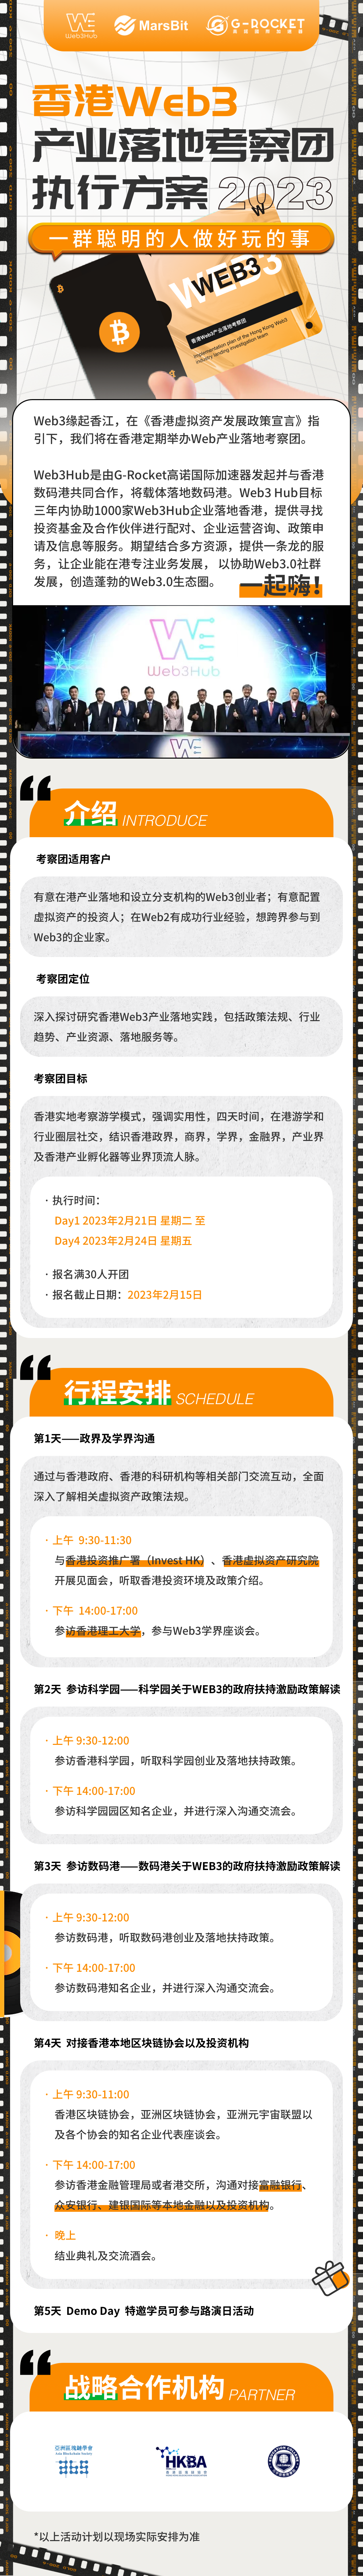 Web3hub、BddsApp联合G-Rocket组织成立「香港Web3产业落地考察团」